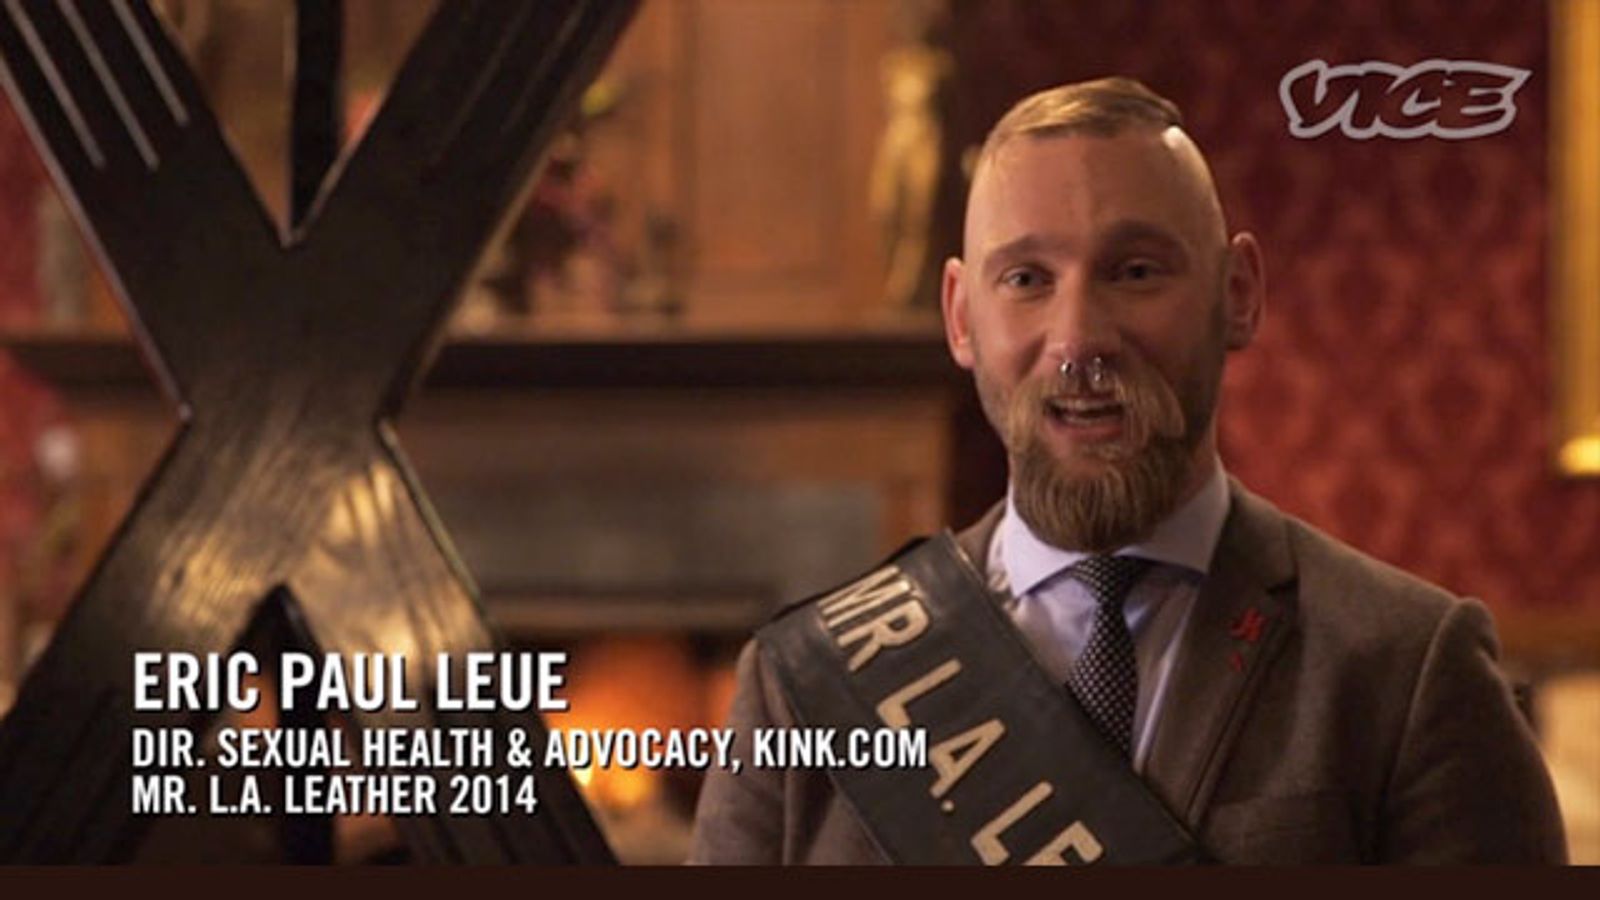 Vice Documentary on Truvada Interviews Kink's Eric Paul Leue